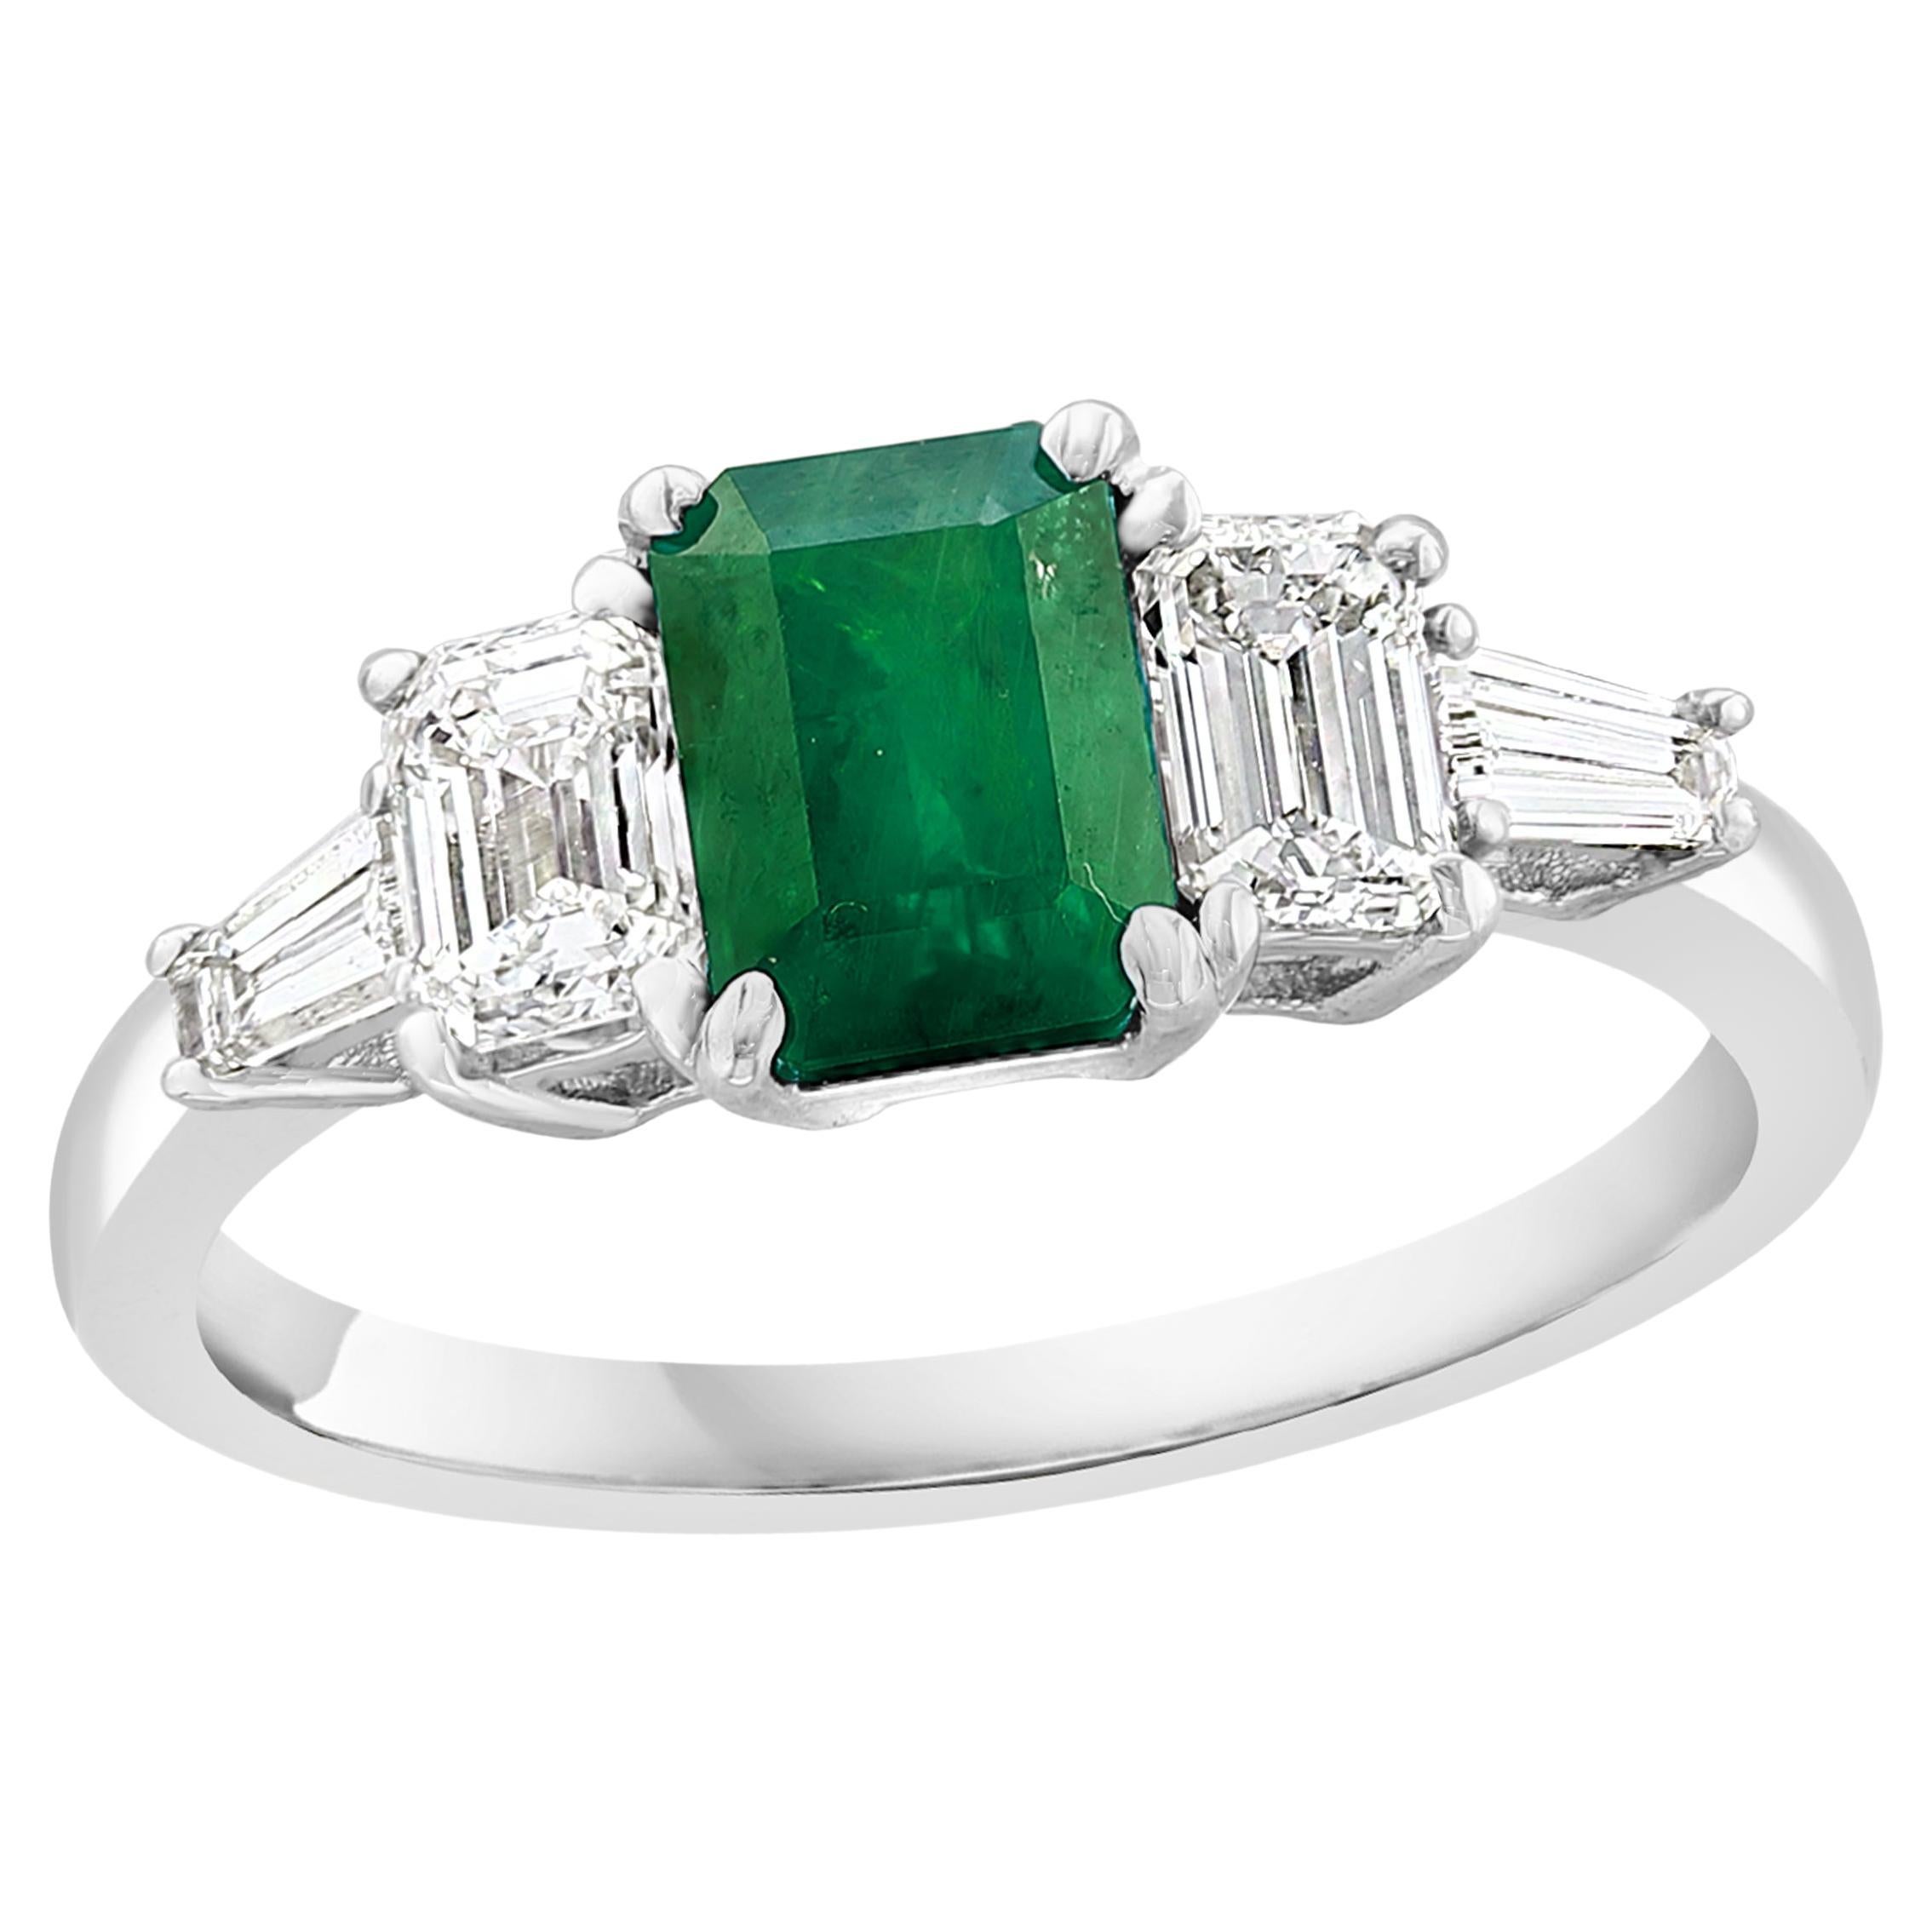 0.72 Carat Emerald Cut Emerald and Diamond 5 Stone Ring in 14K White Gold